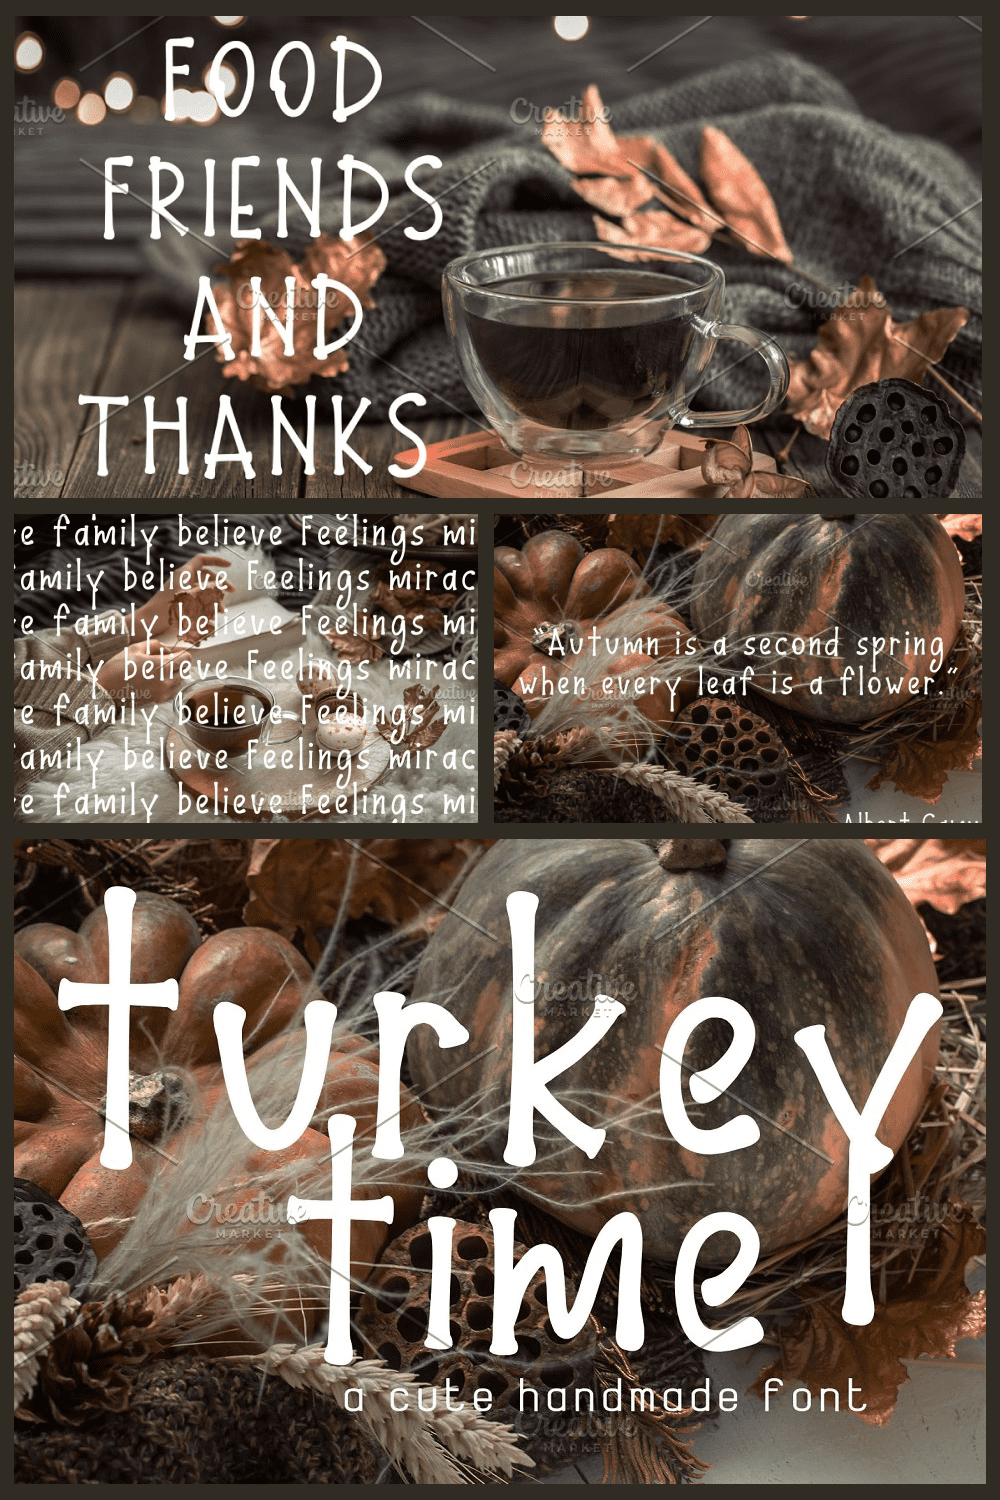 Turkey time handmade font.